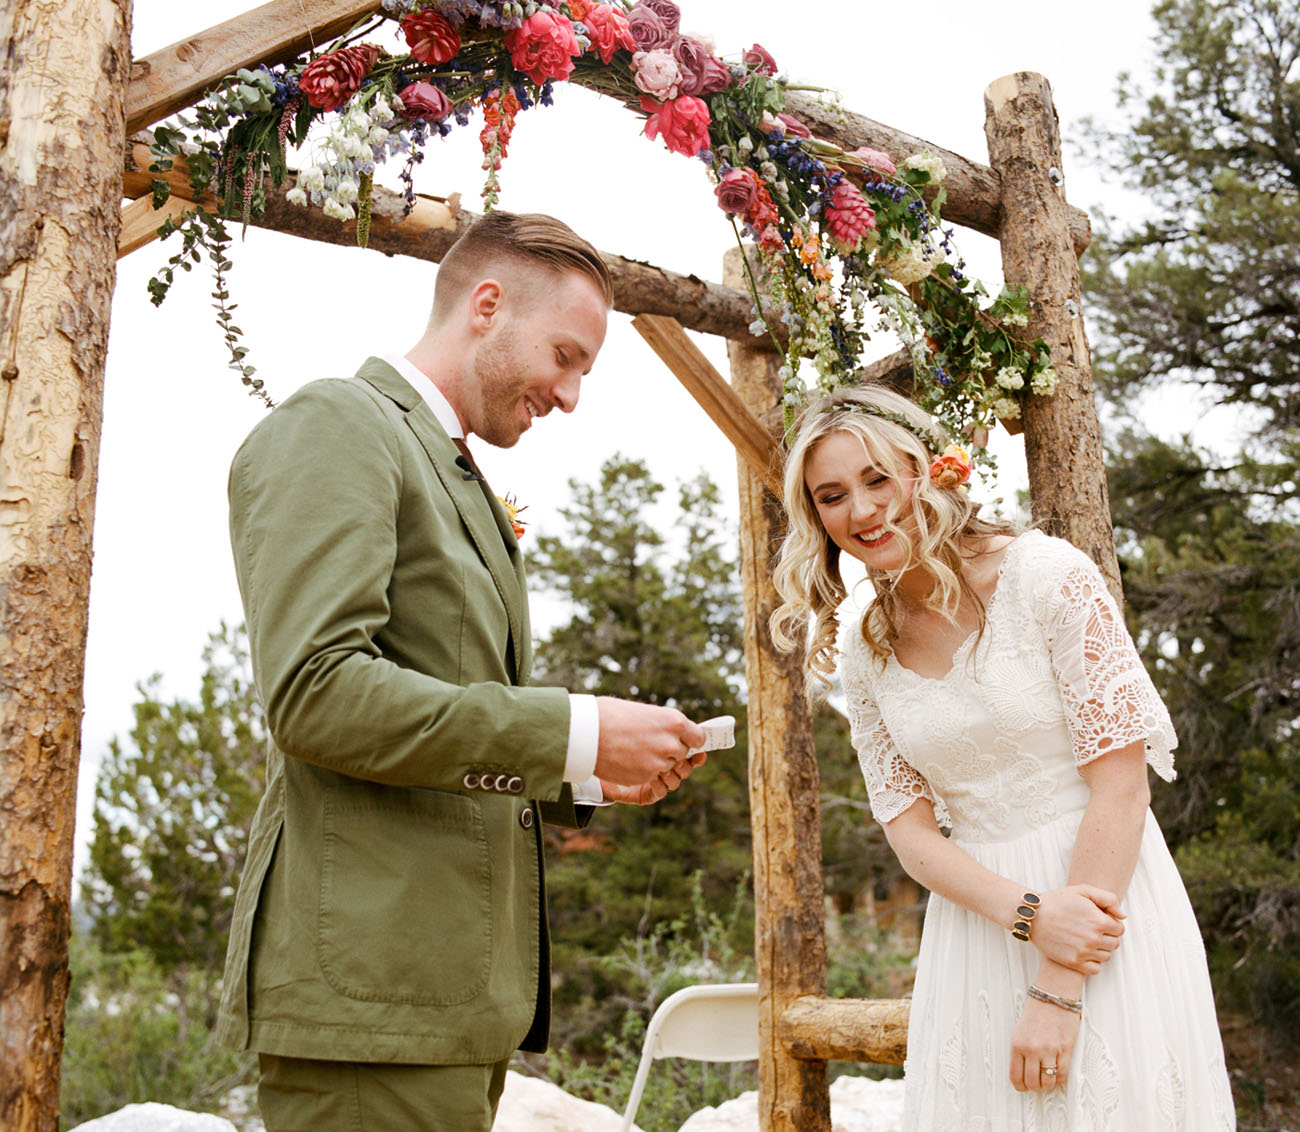 Prairie Coachella Inspired Wedding